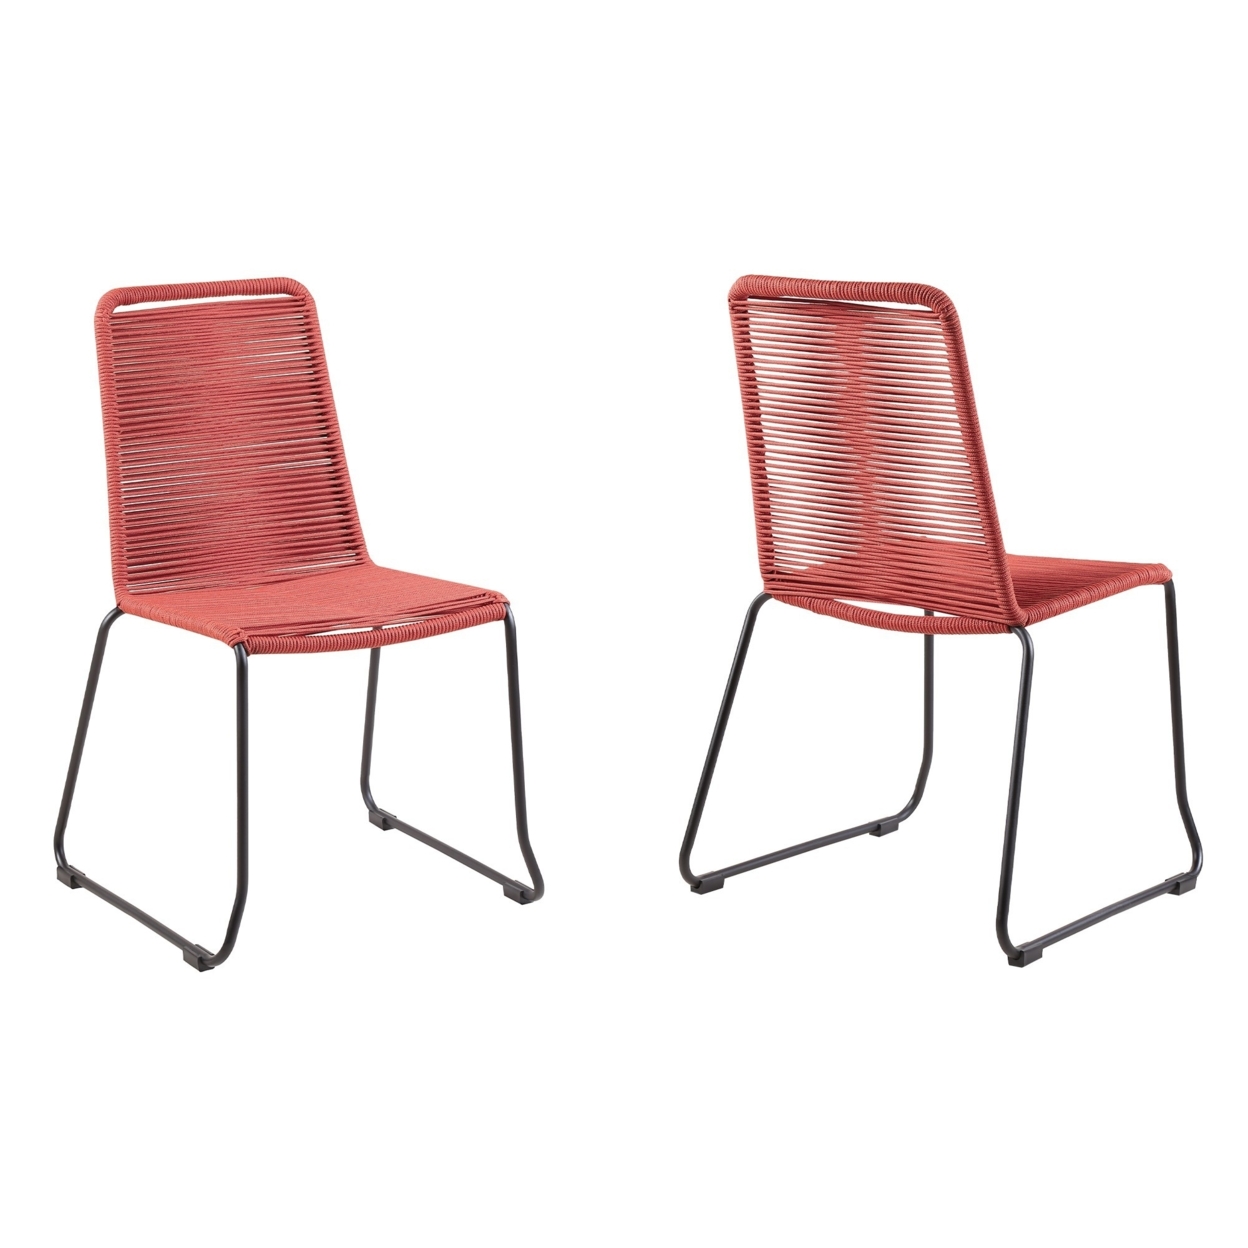 18.5 Inches Fishbone Weaved Metal Dining Chair, Set Of 2, Red- Saltoro Sherpi